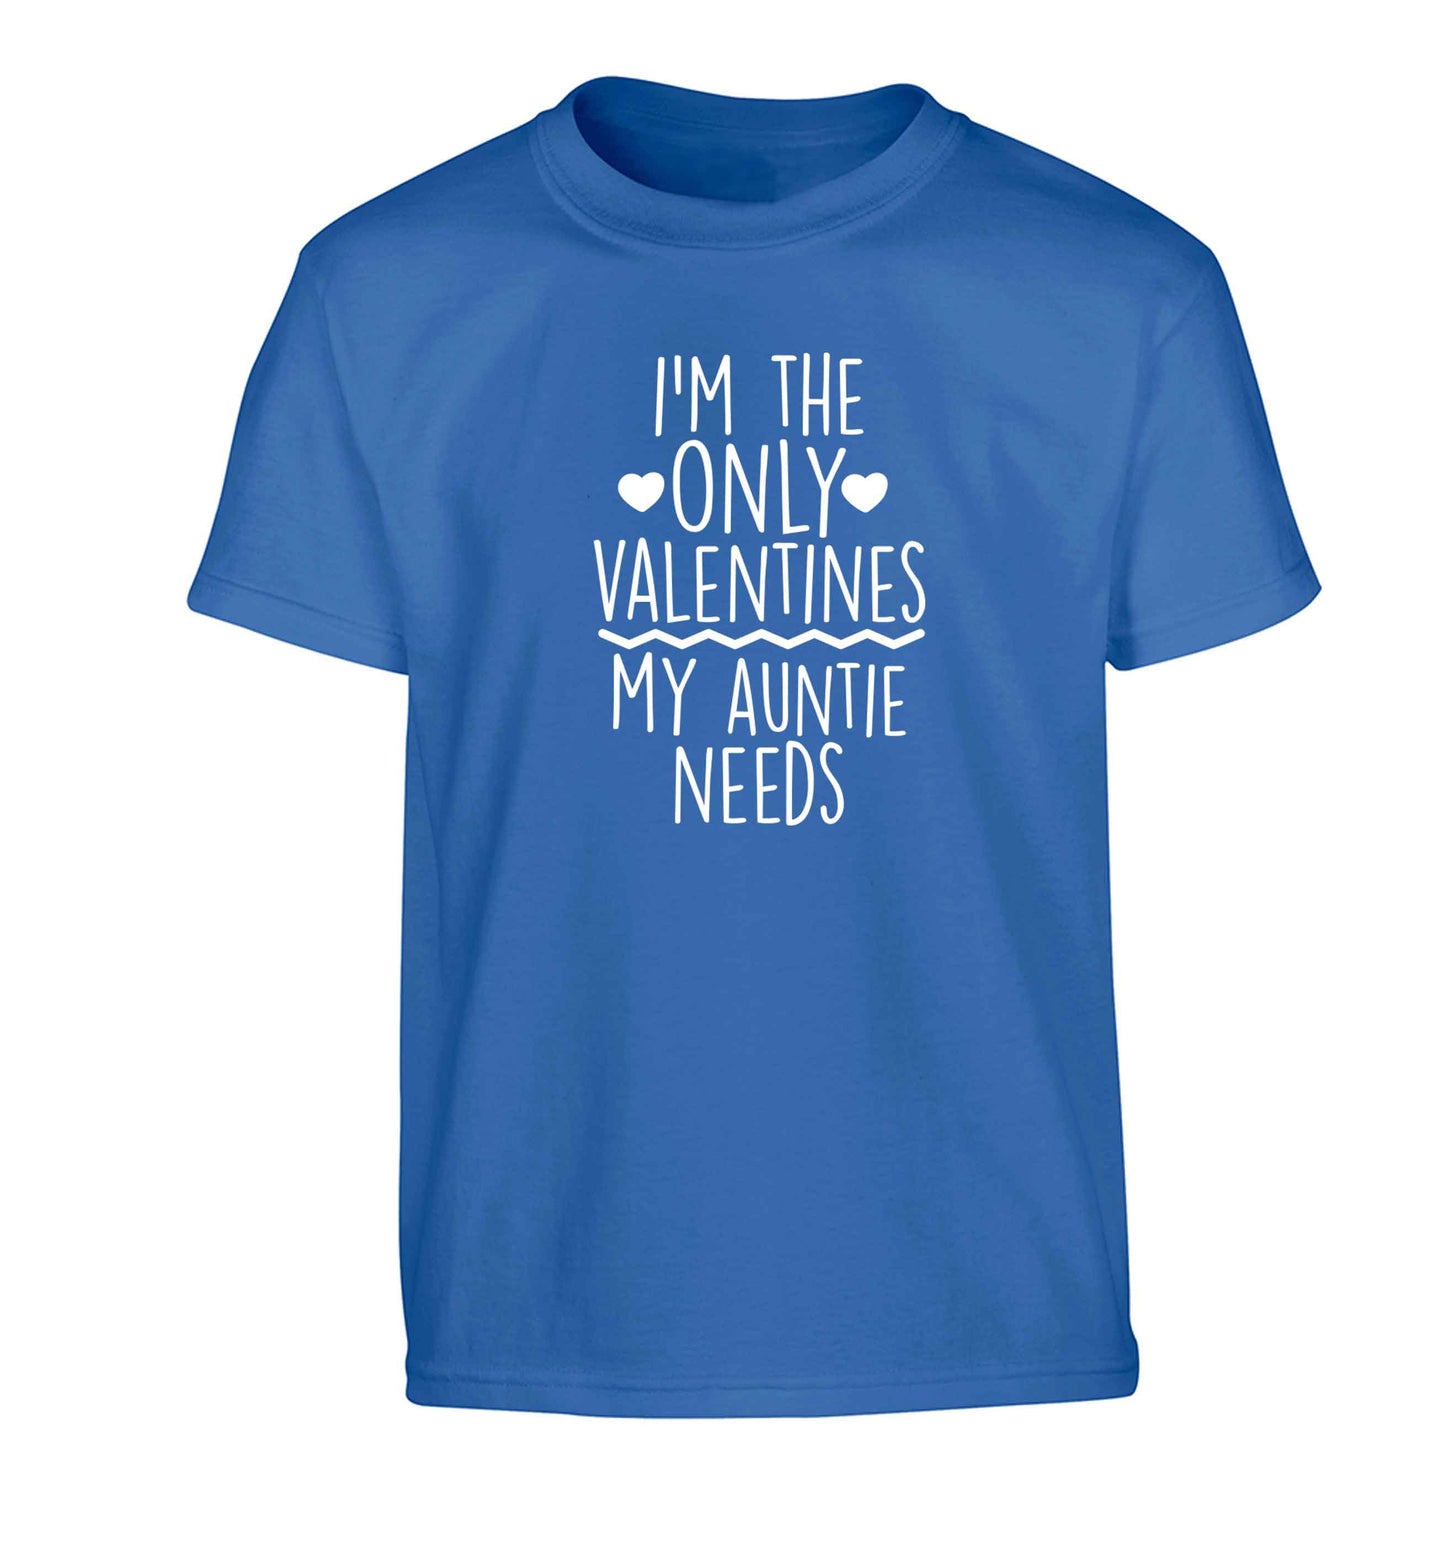 I'm the only valentines my auntie needs Children's blue Tshirt 12-13 Years